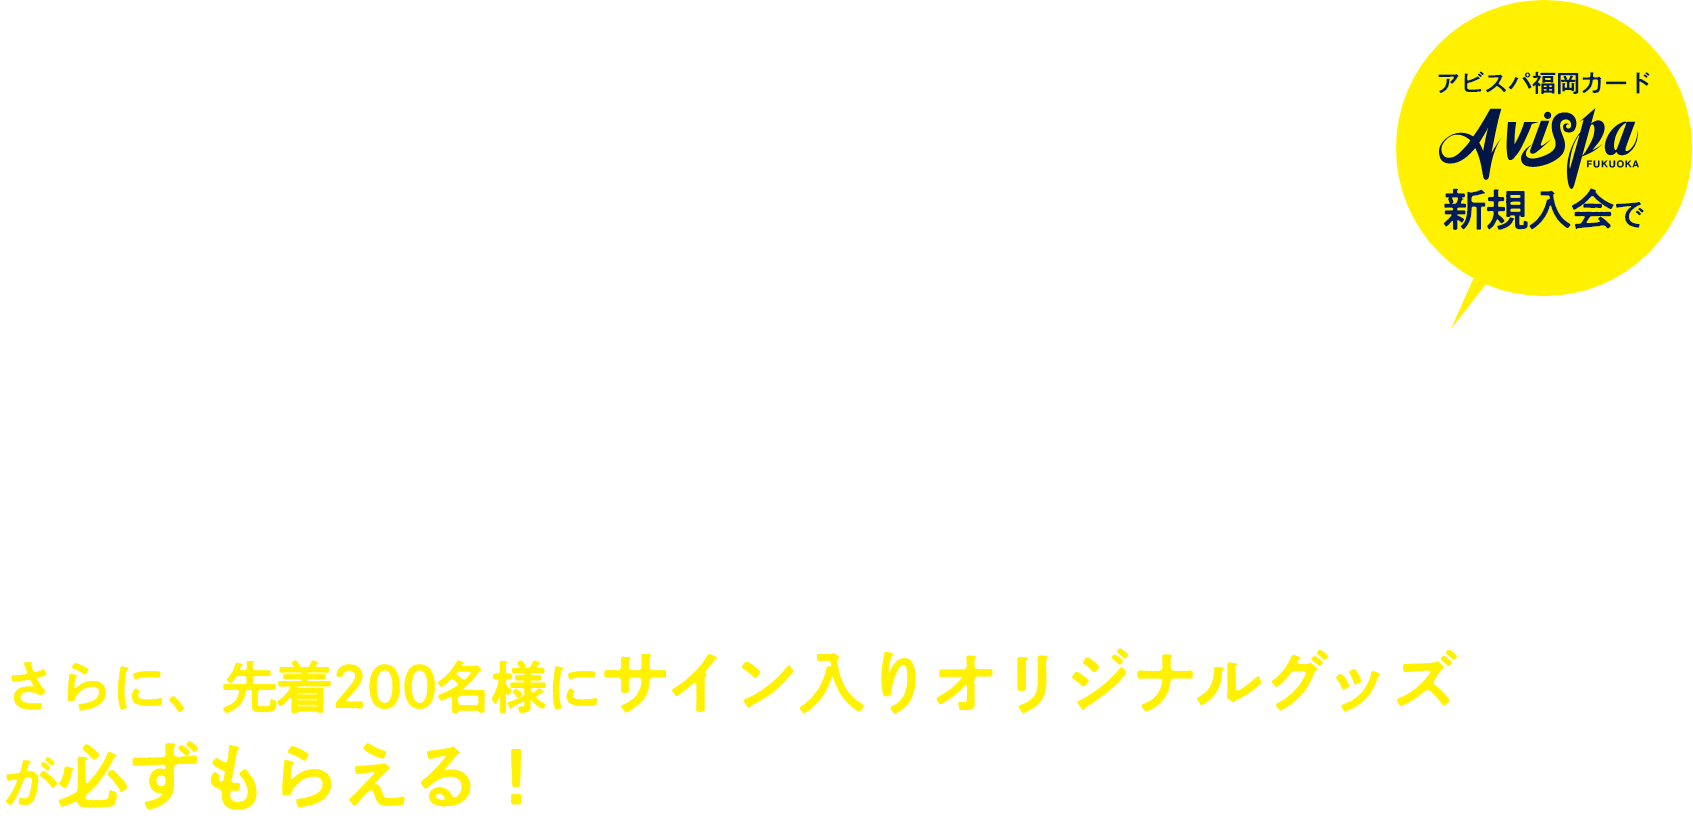 J1シーズン開幕！アビスパ福岡応援キャンペーン 先着200名様に選手のサイン入りオリジナルグッズがもらえる！